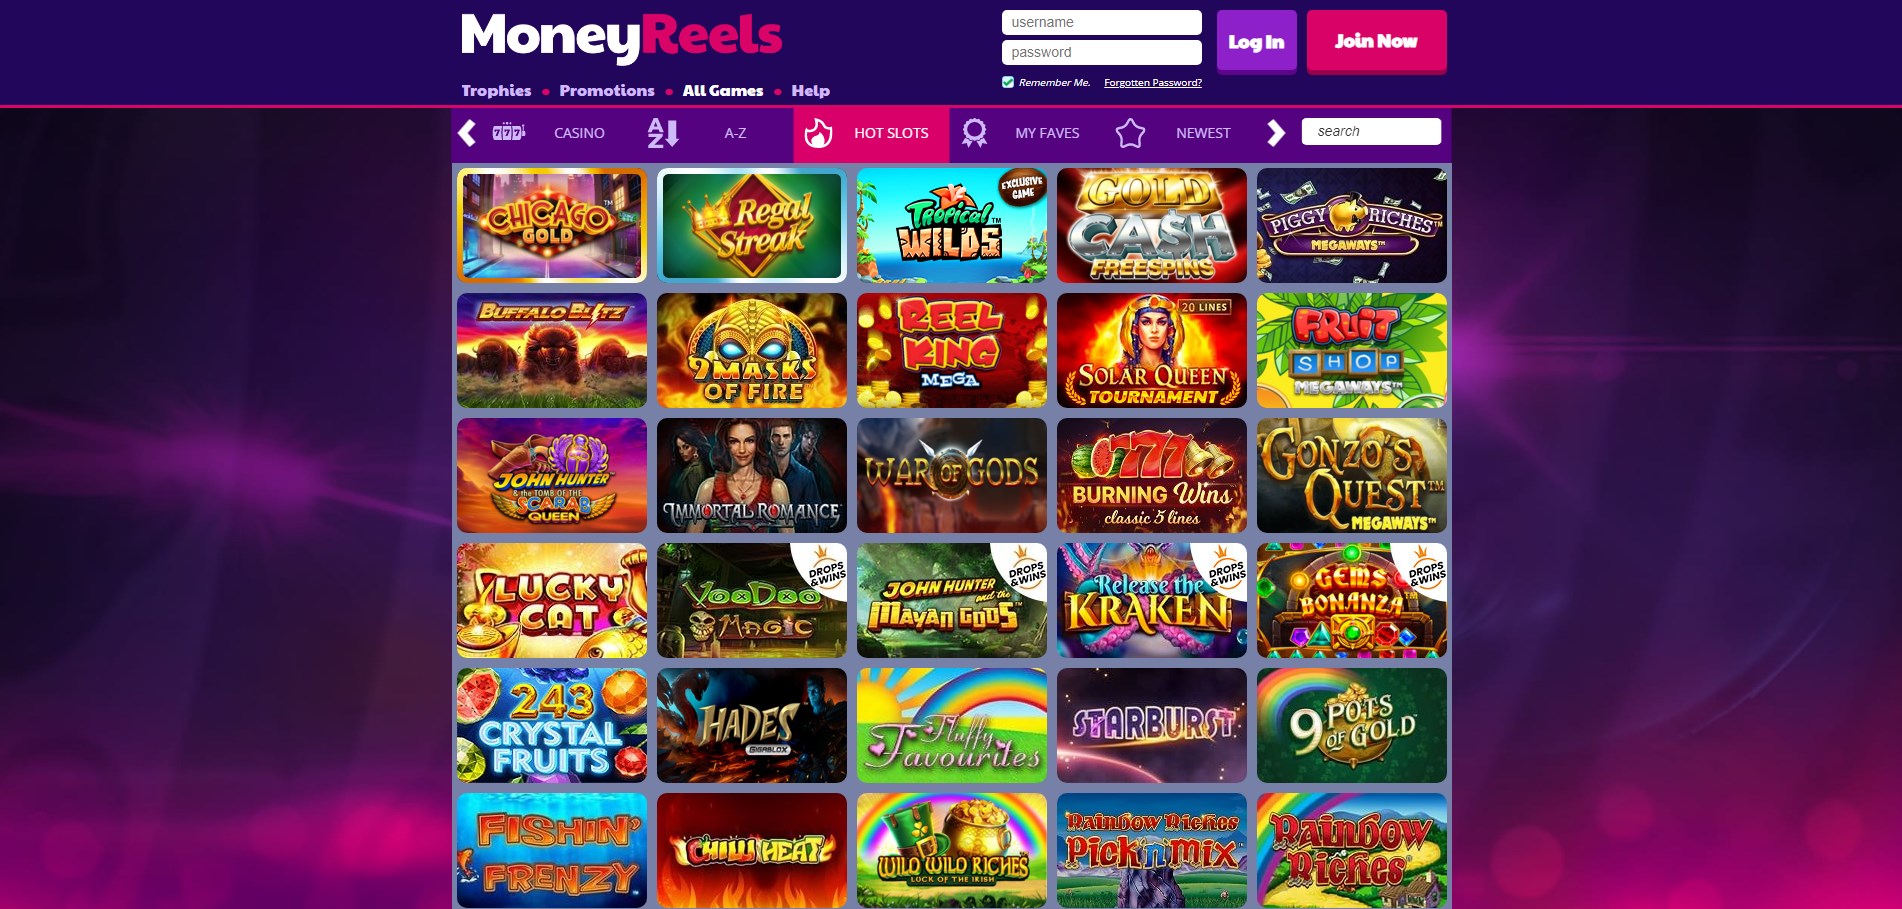 Money Reels Casino Games